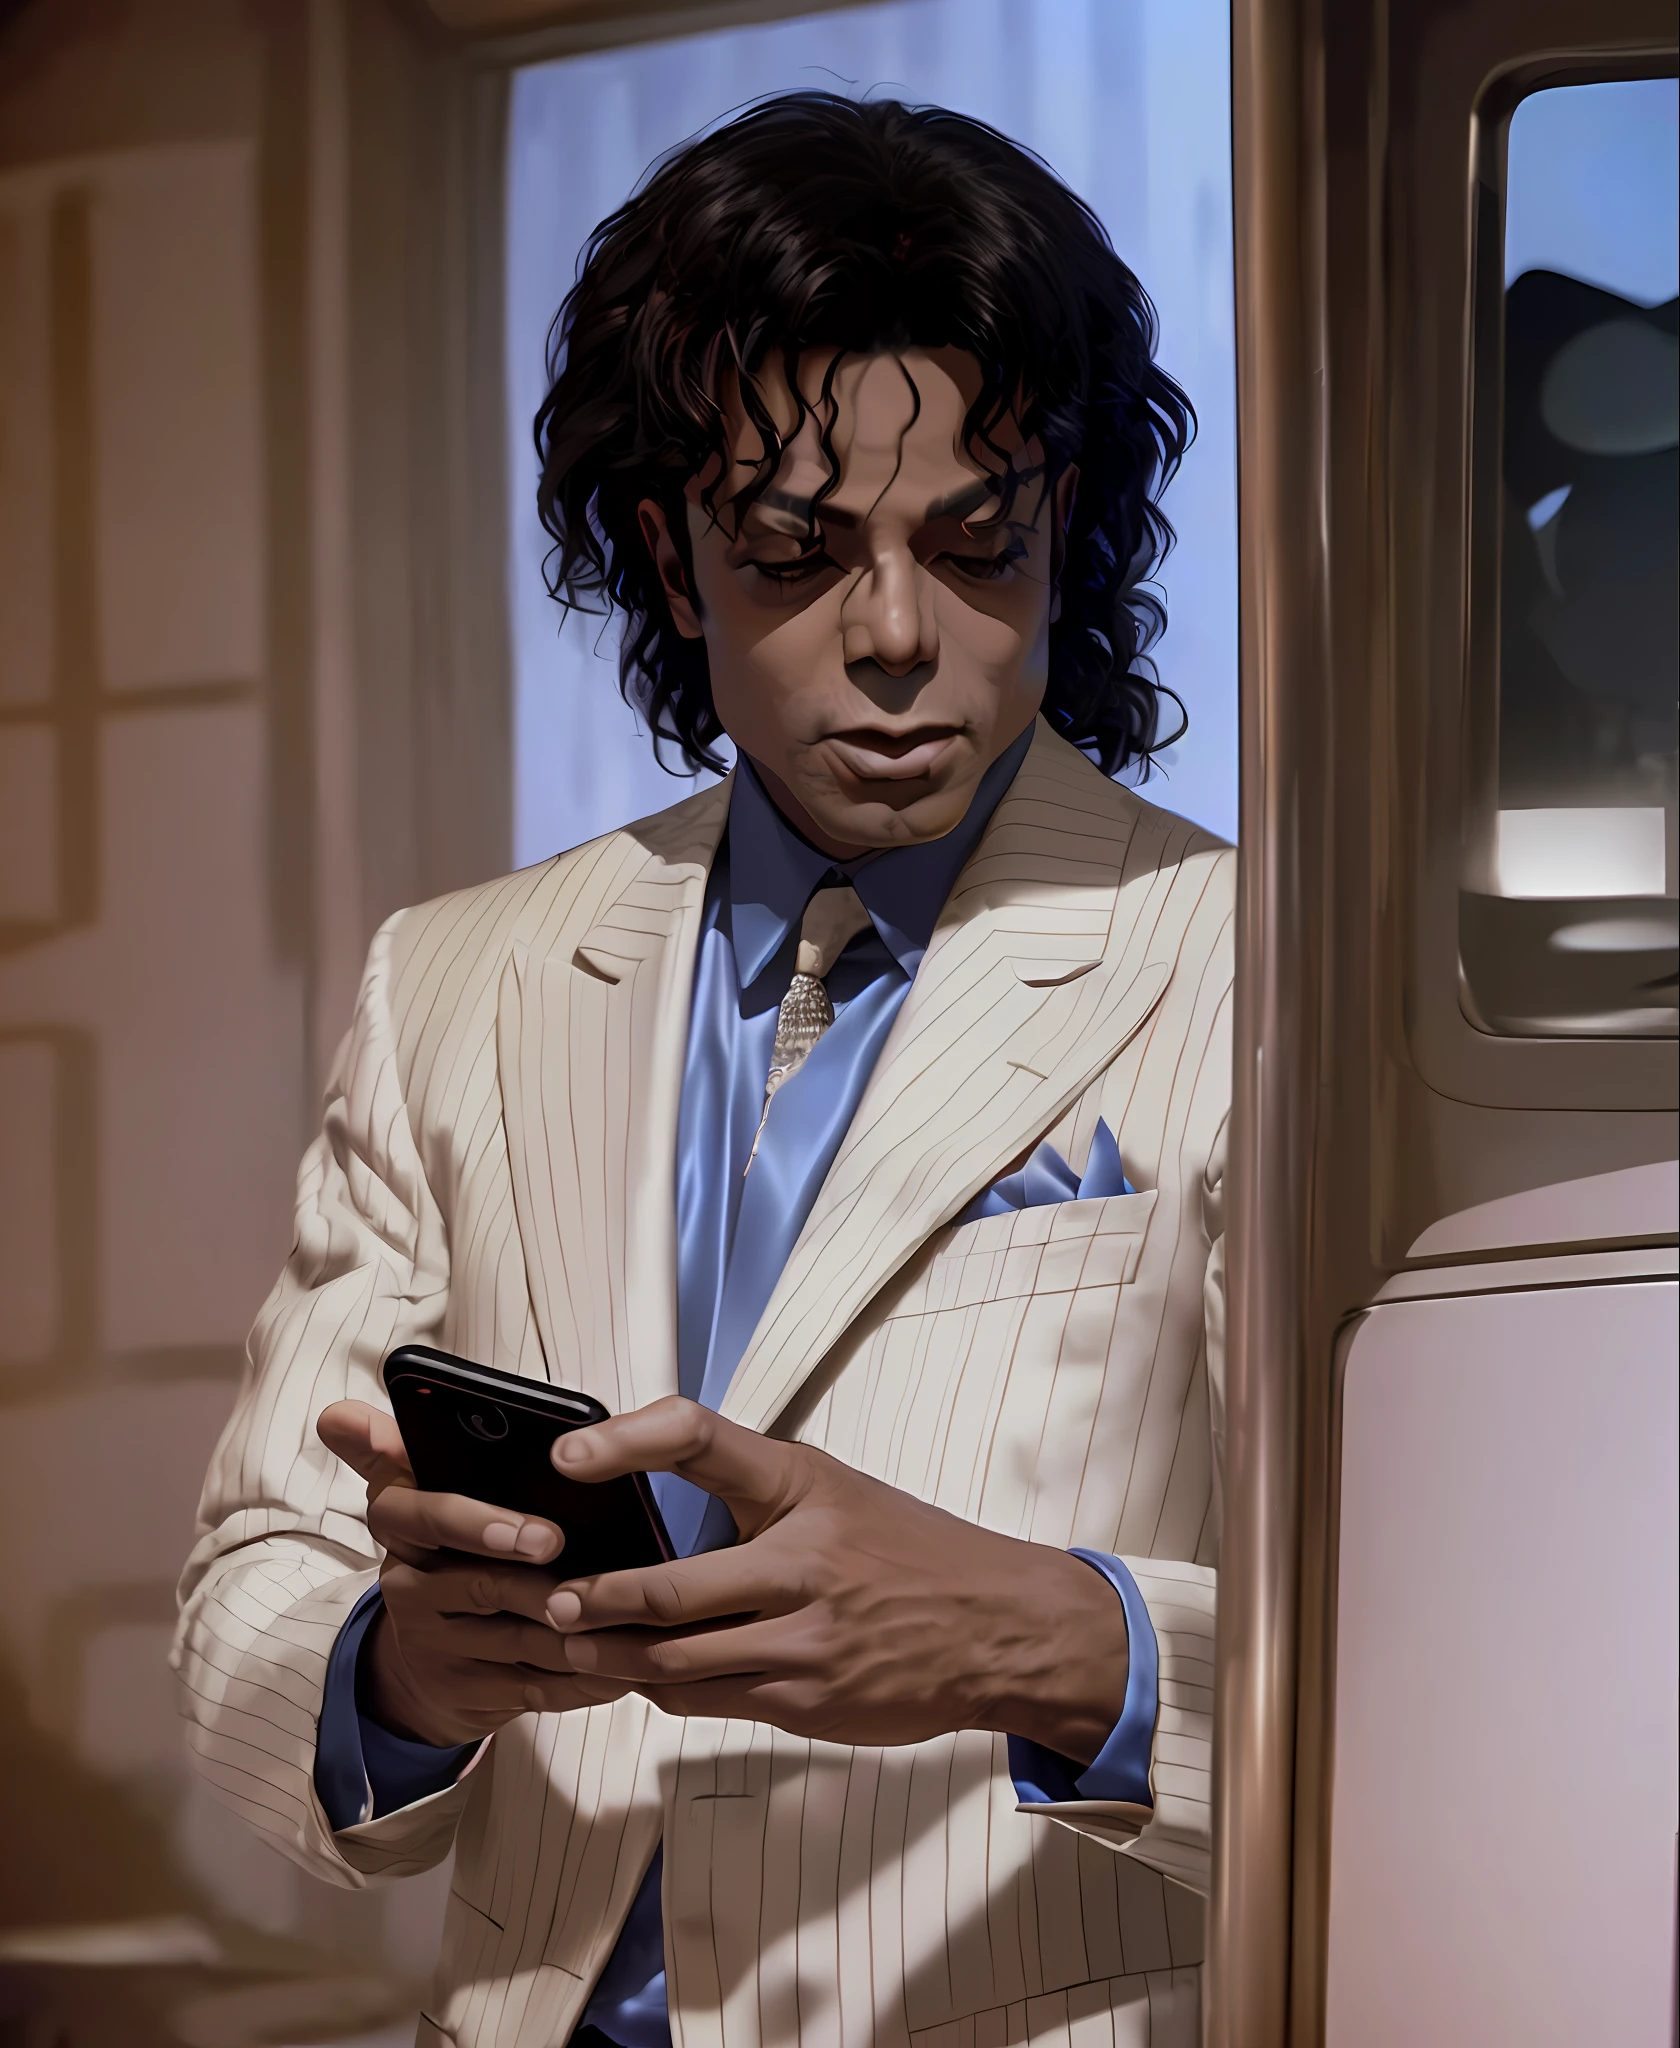 smoothcriminal Michael Jackson texting on a smartphone next to 